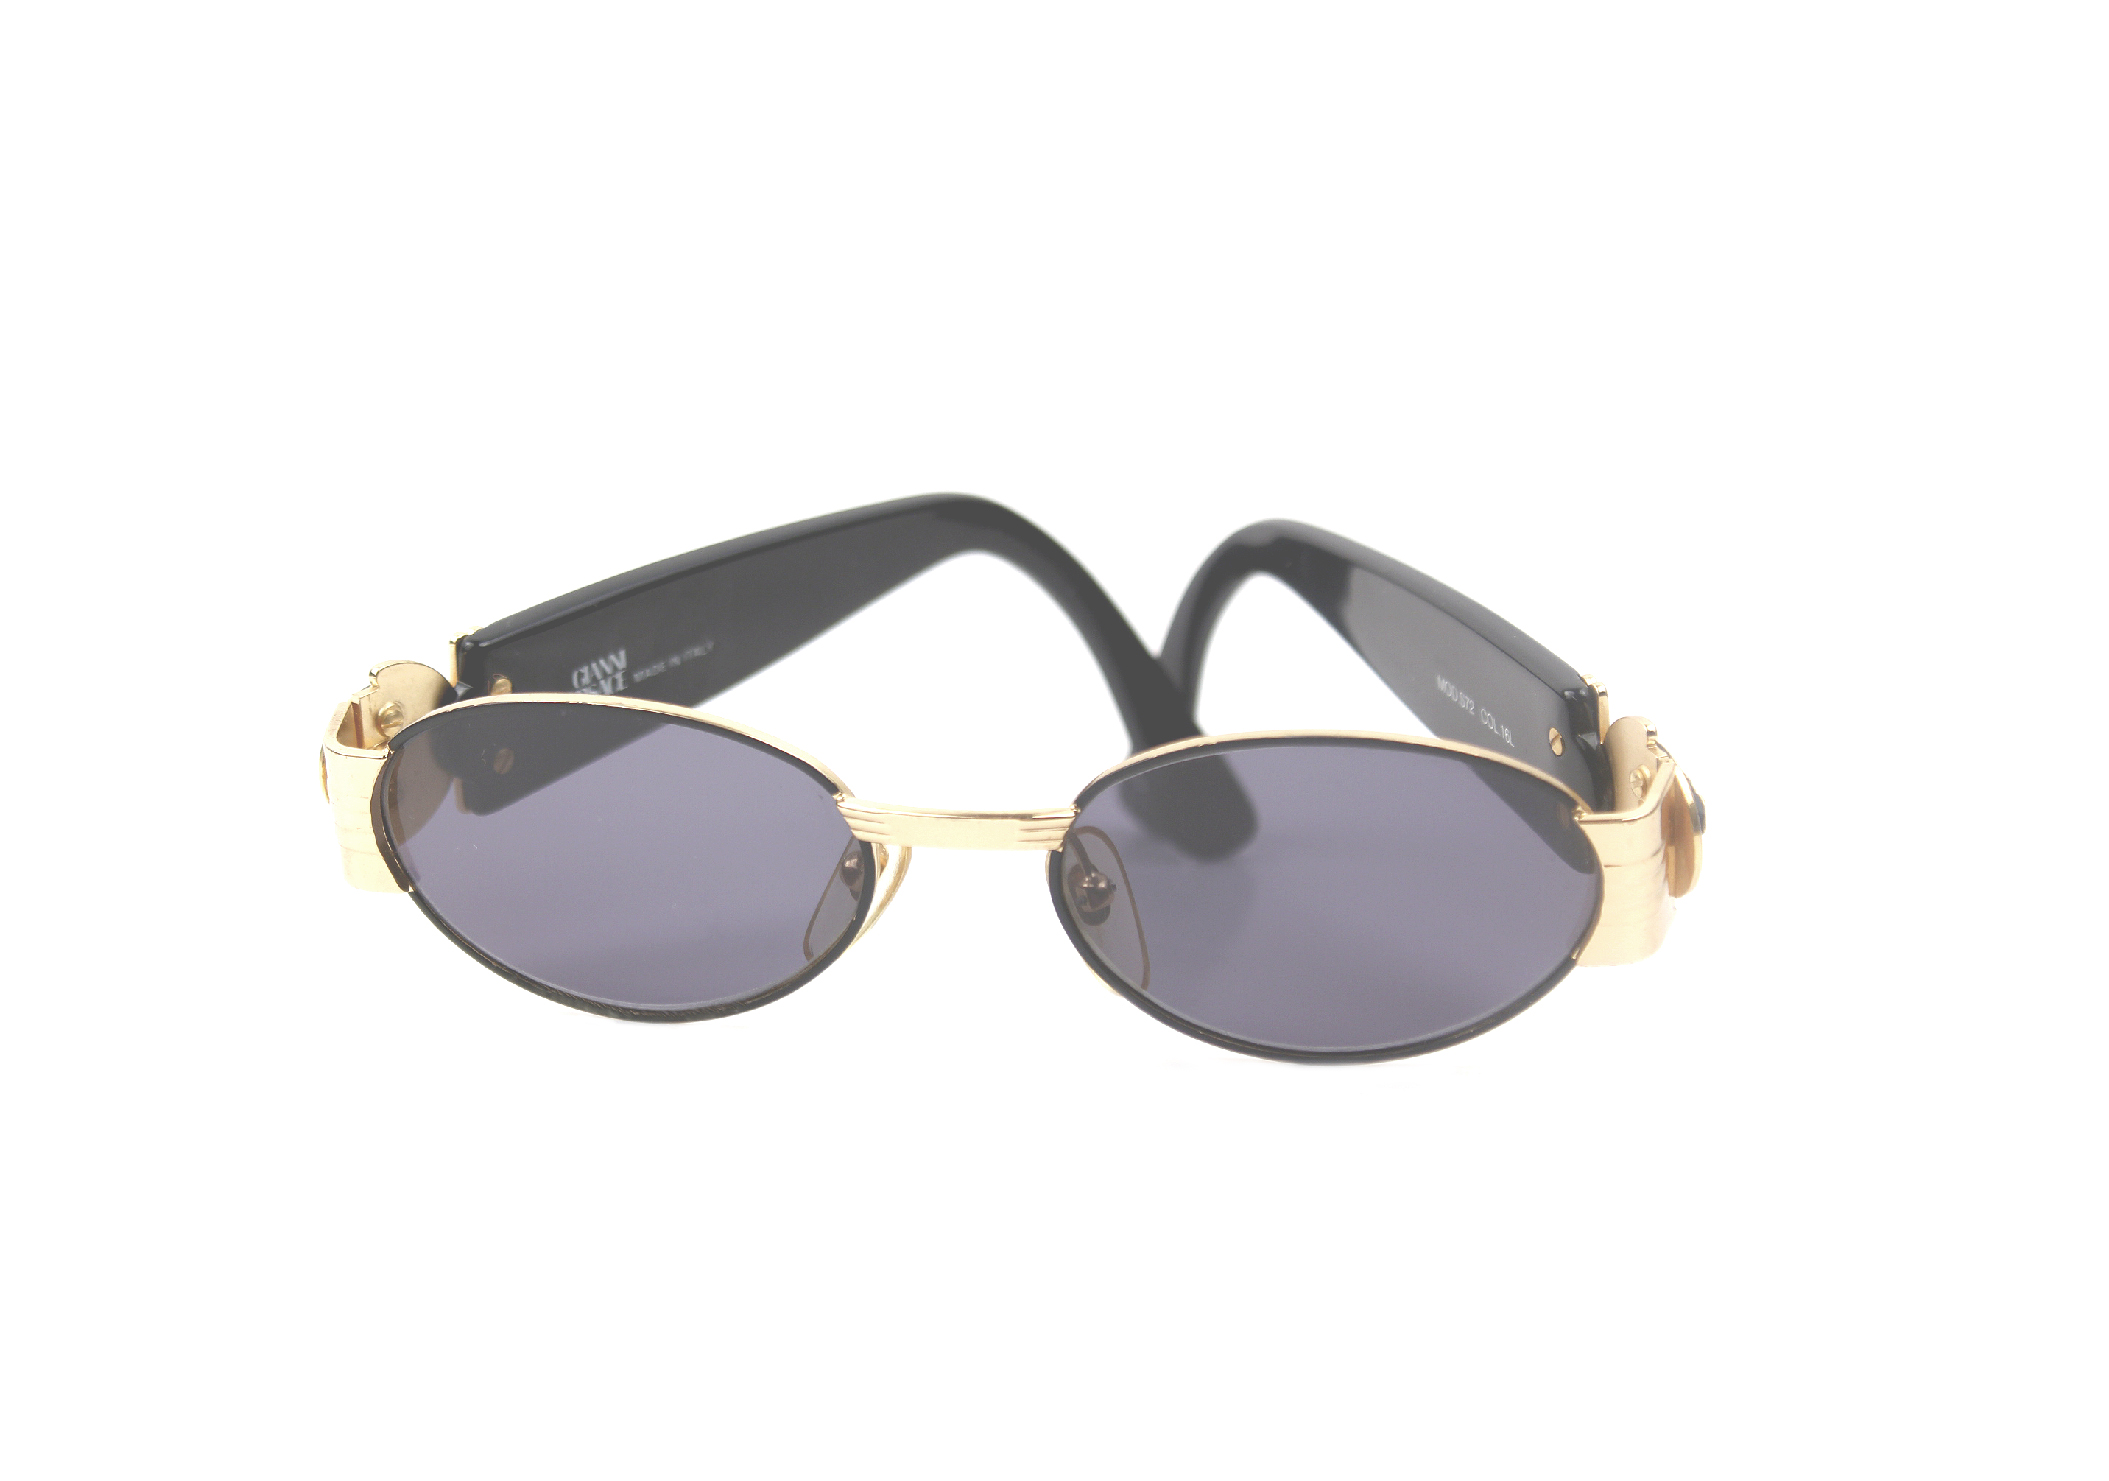 versace gold sunglasses vintage